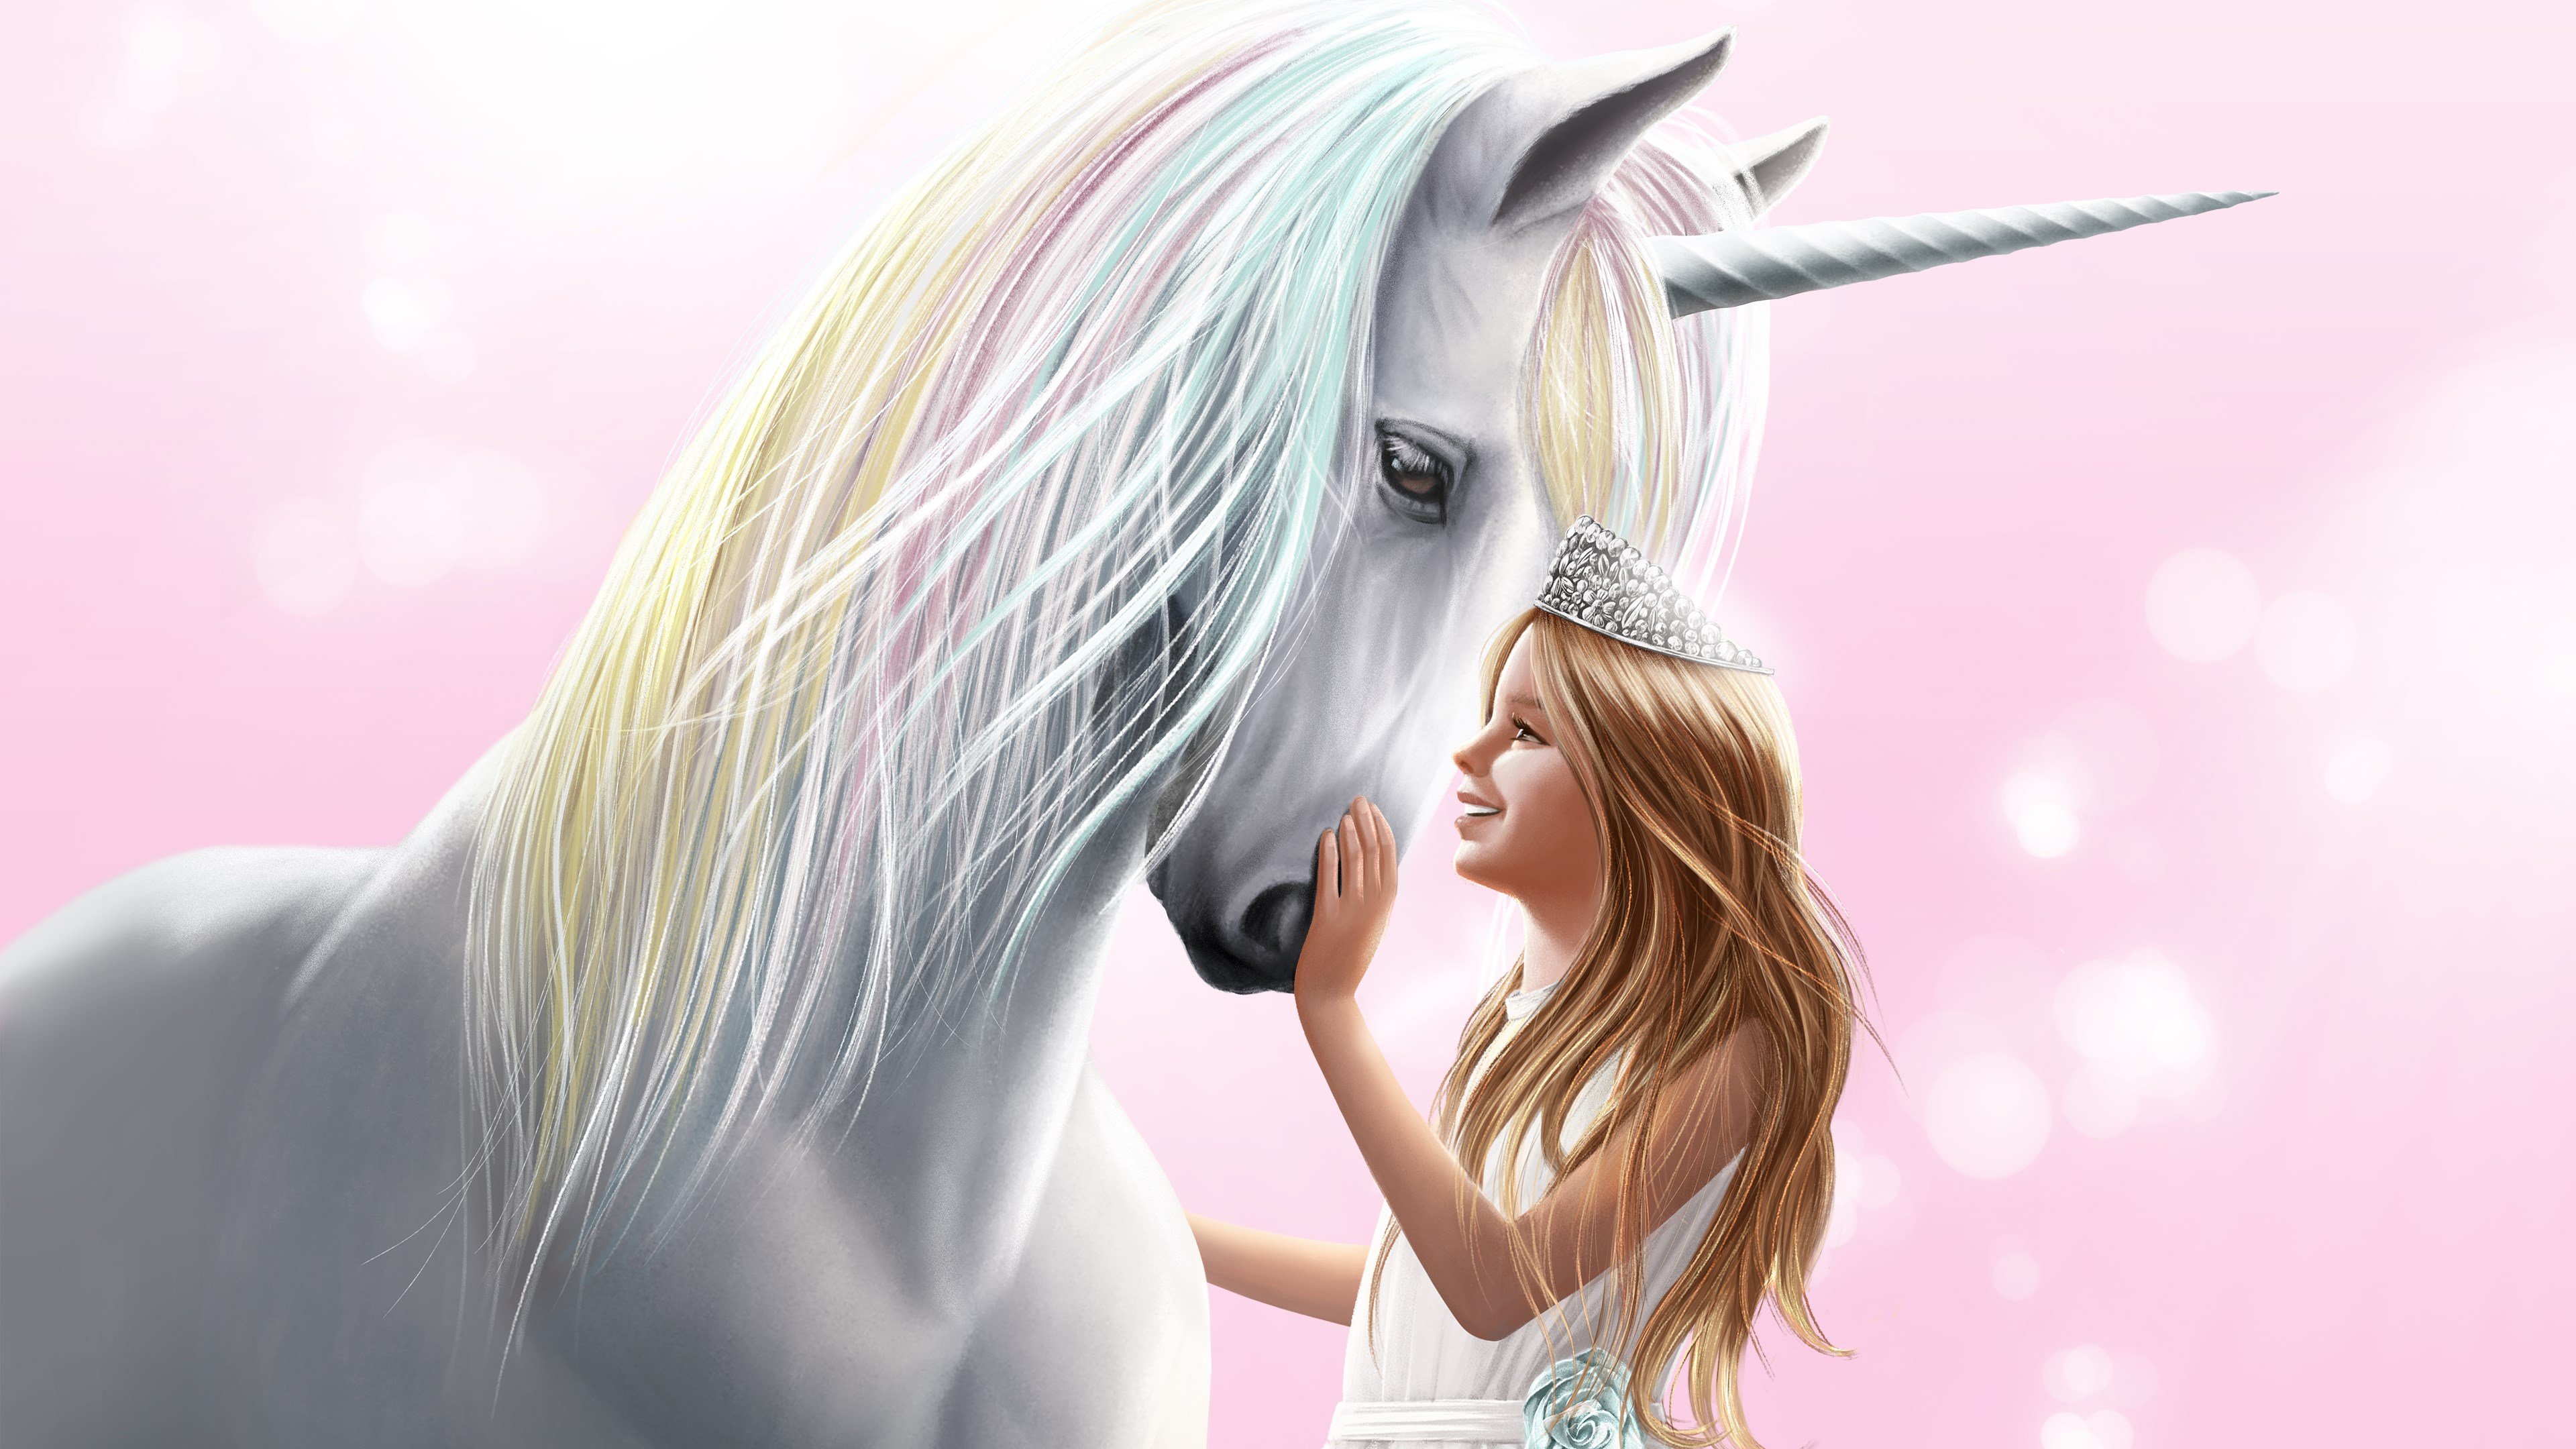 The Unicorn Princess cover image